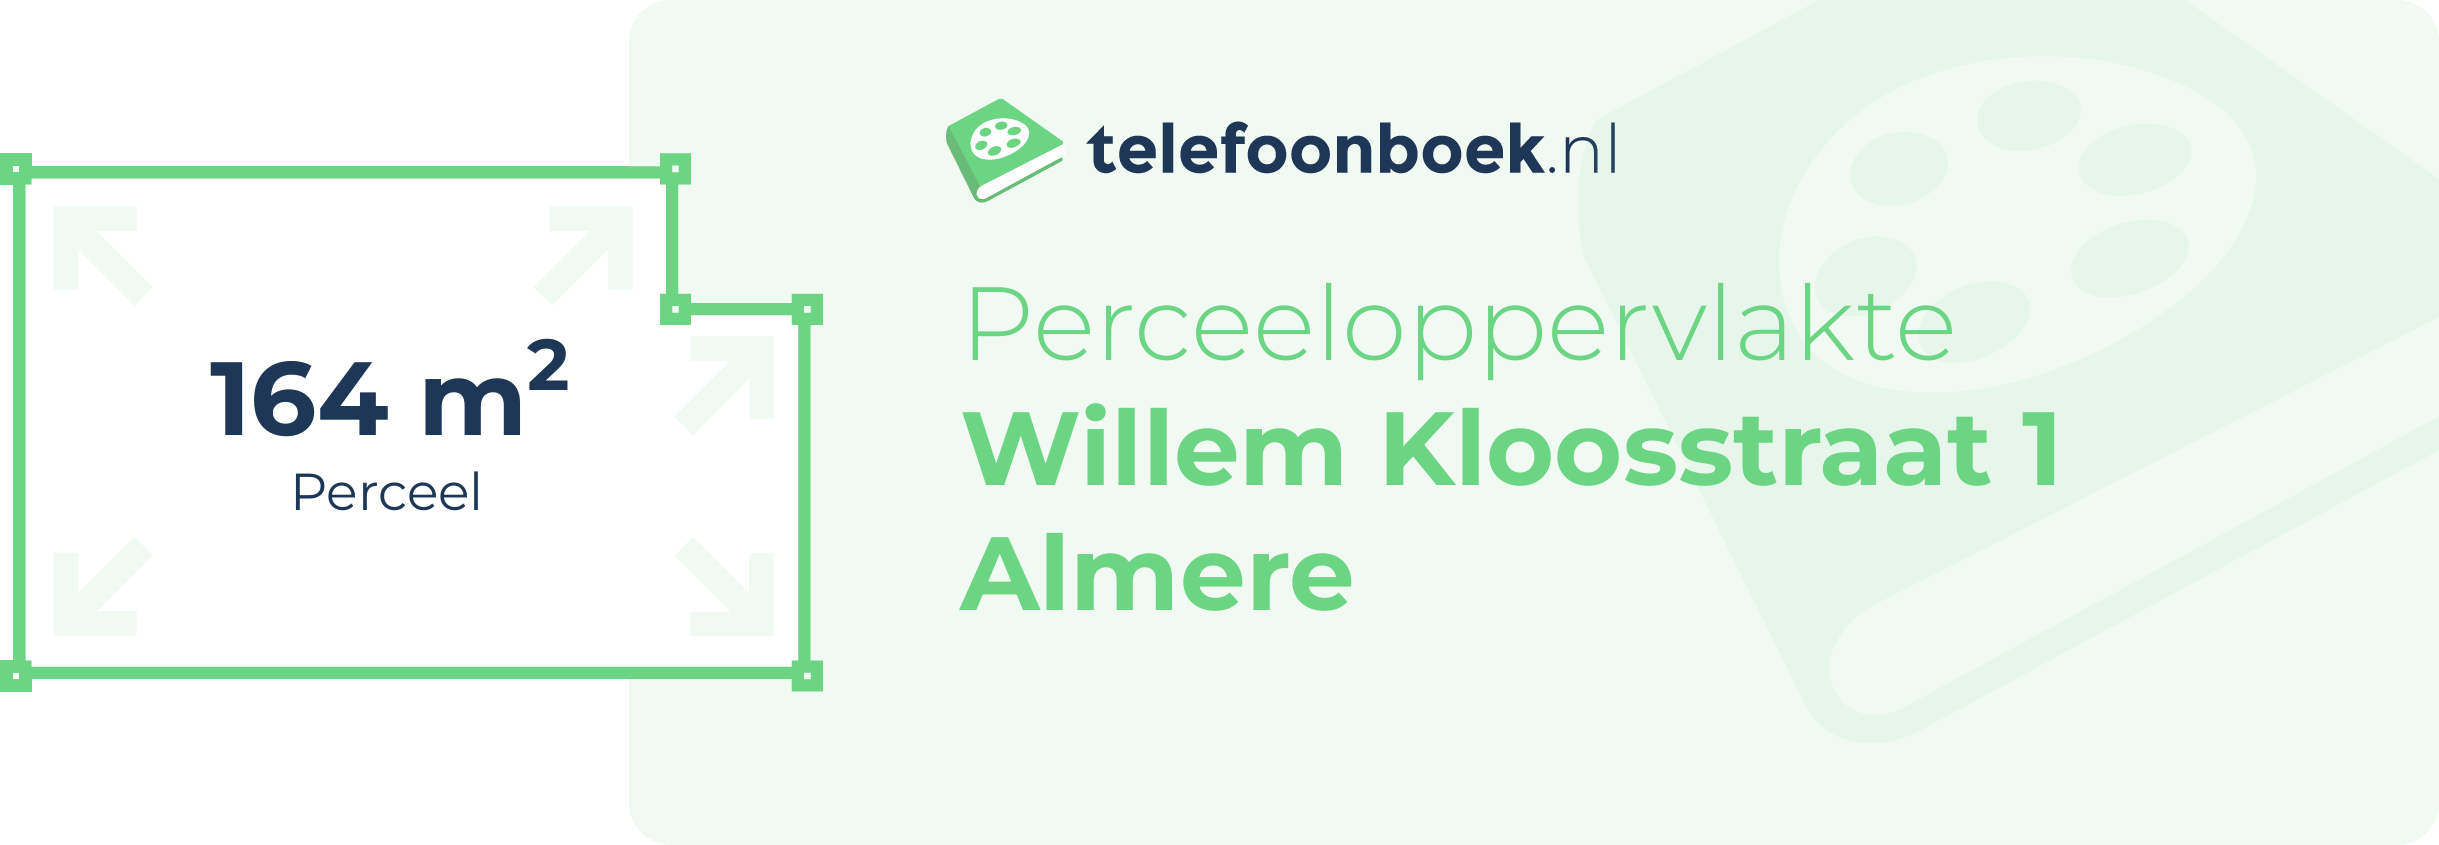 Perceeloppervlakte Willem Kloosstraat 1 Almere